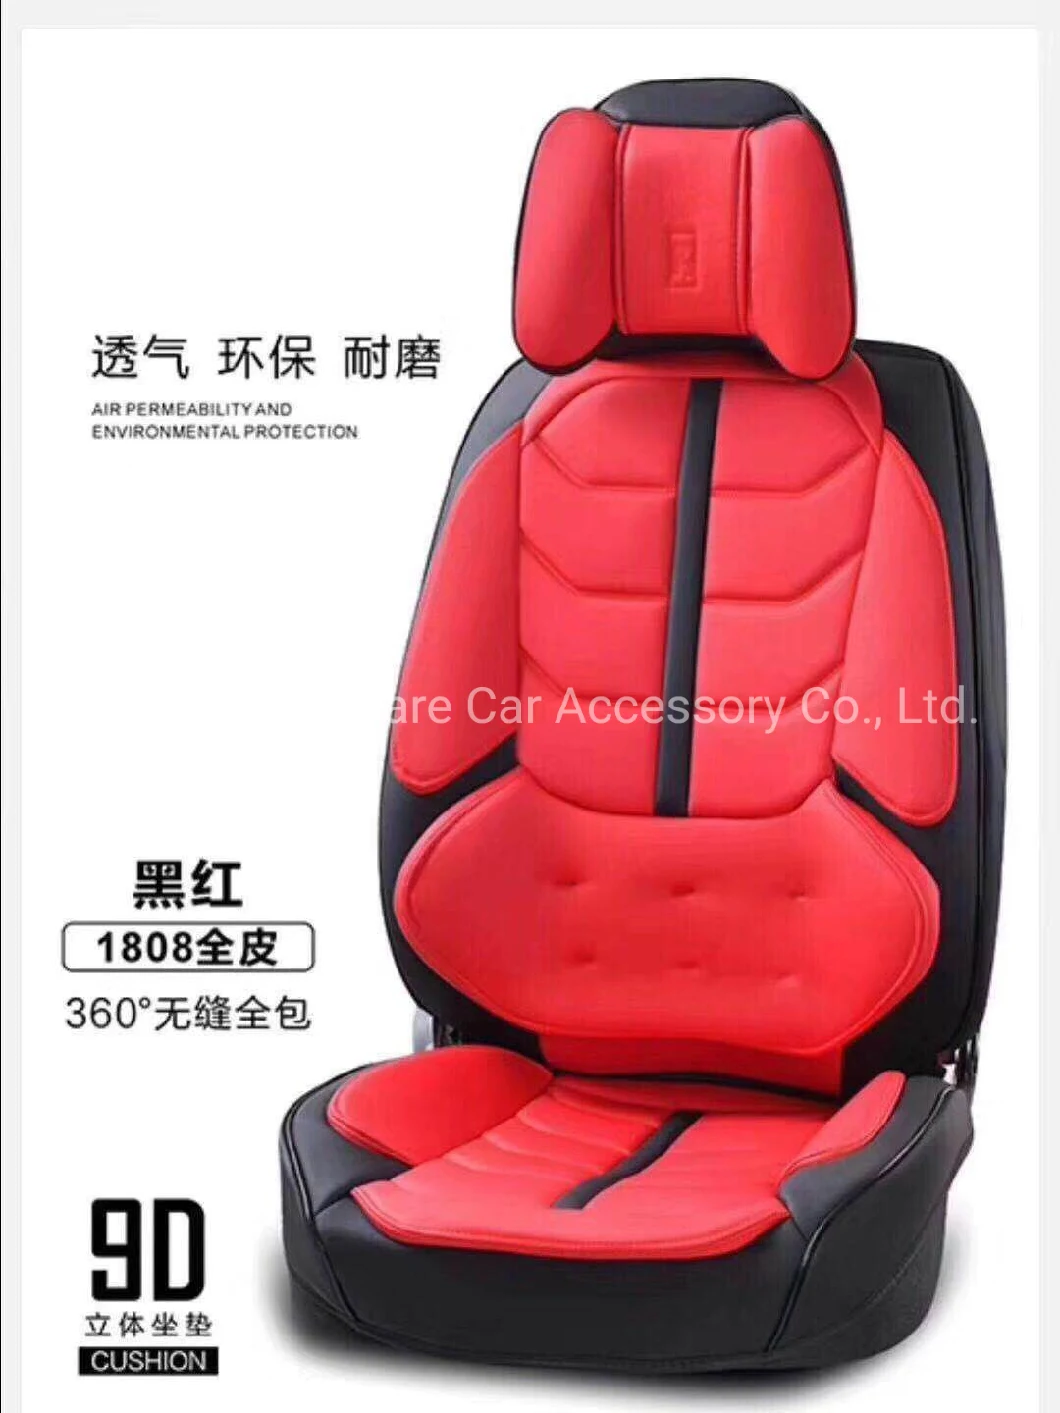 Car Accessories Car Decoration Car Seat Cushion Universal Leather Auto Car Seat Cover